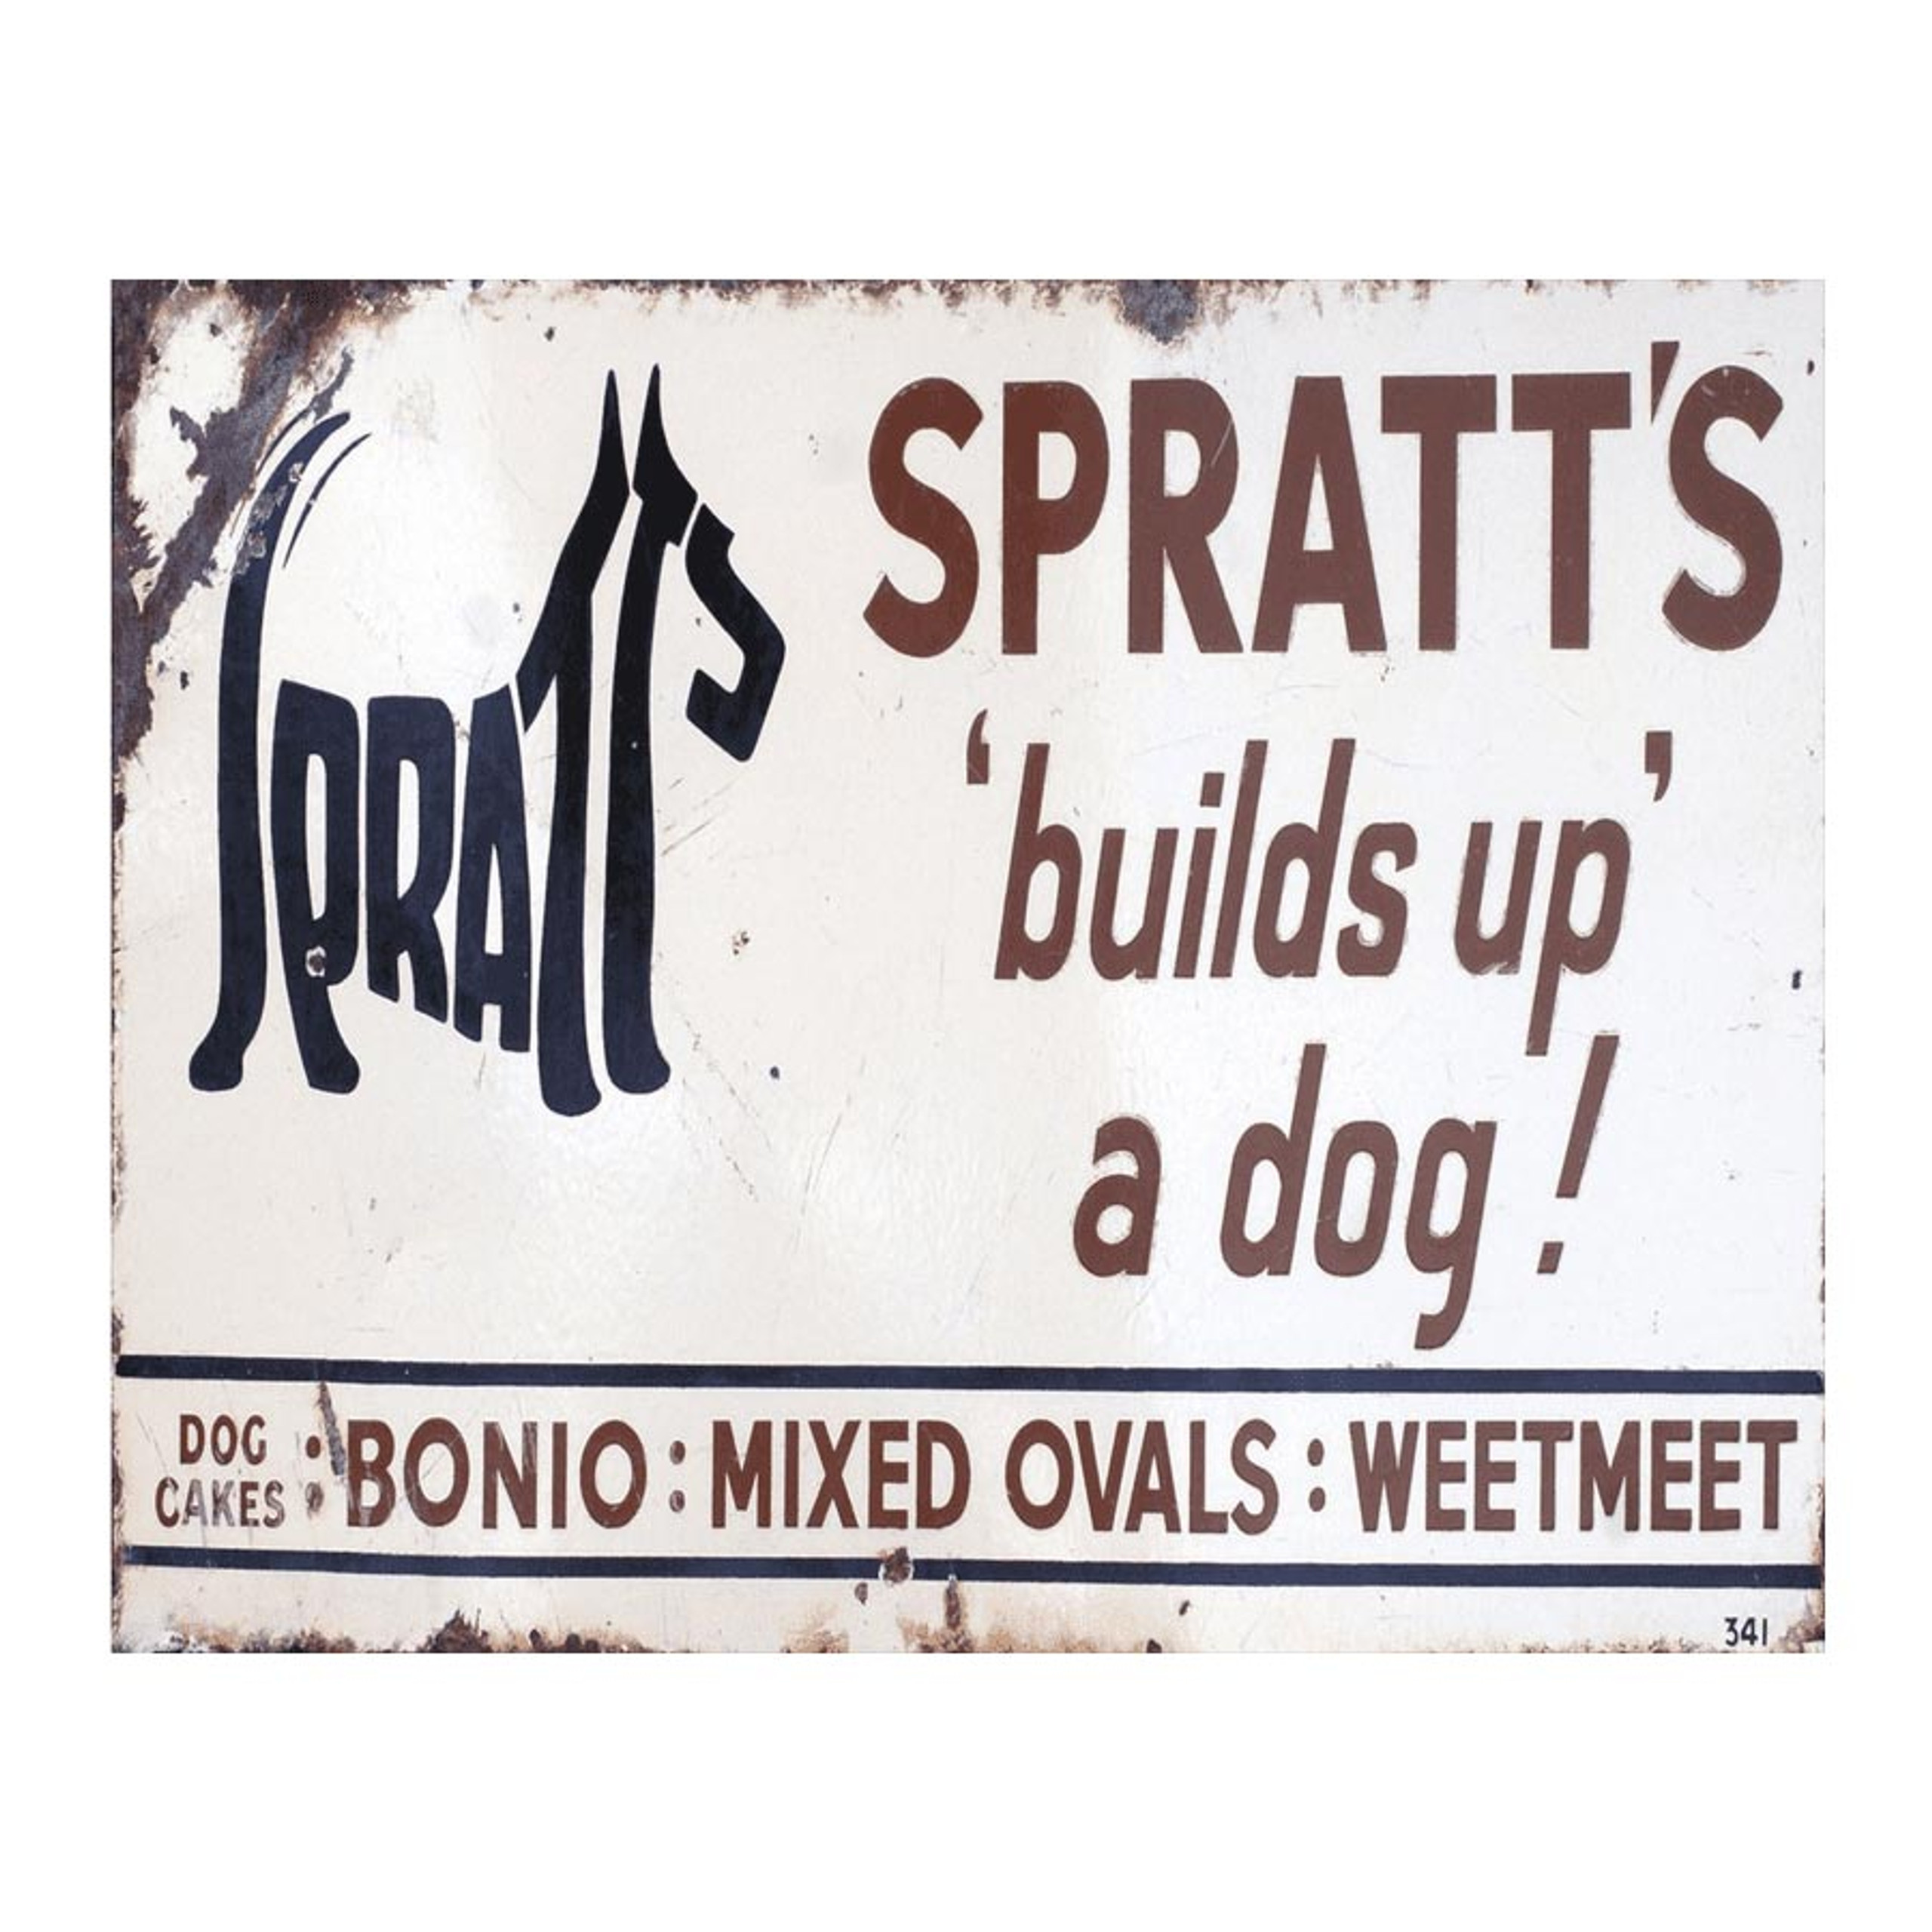 Details about   Vintage Ideal Dog Food Good Luck Advertising Metal Dog Figurine 